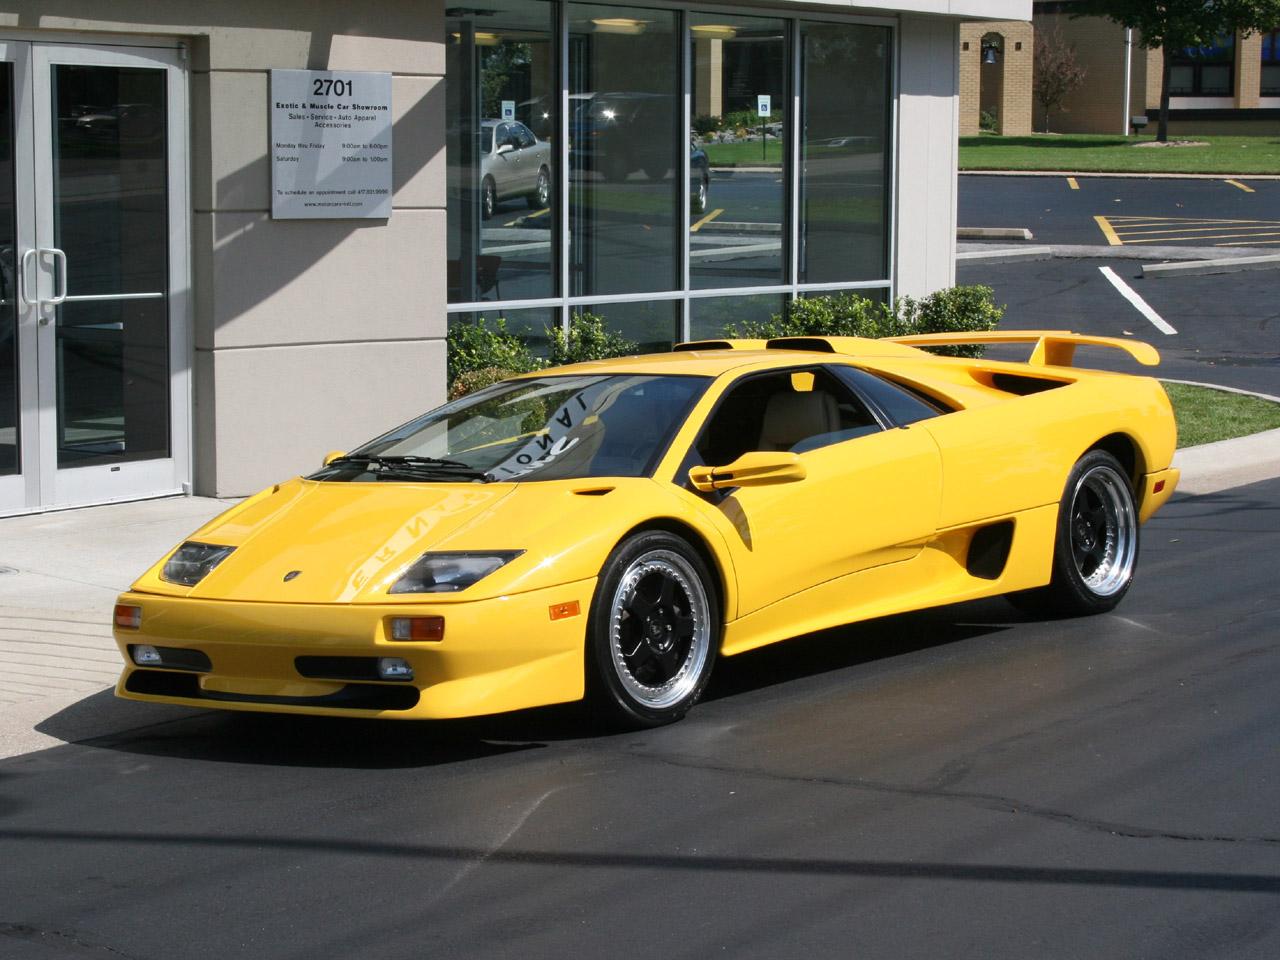 Lamborghini Diablo SV 1999